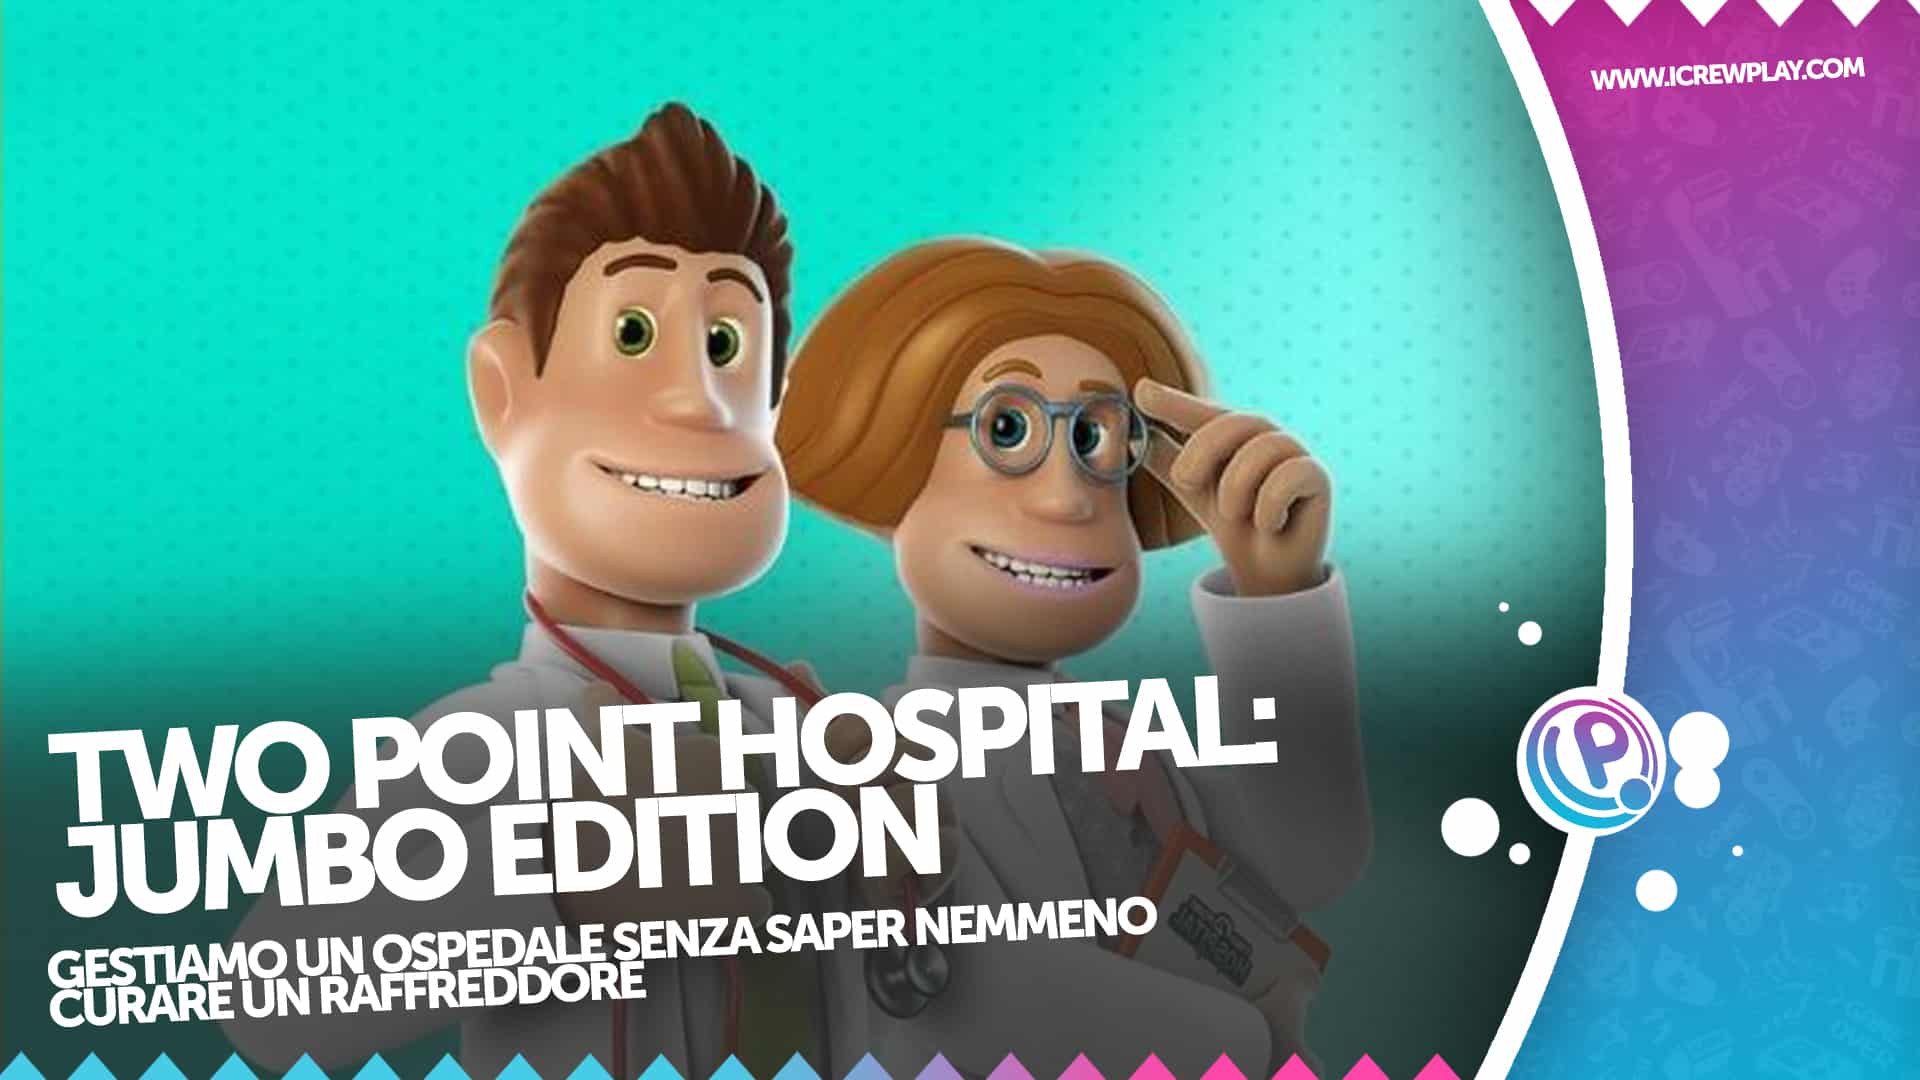 Two Point Hospital: Jumbo Edition la recensione 8